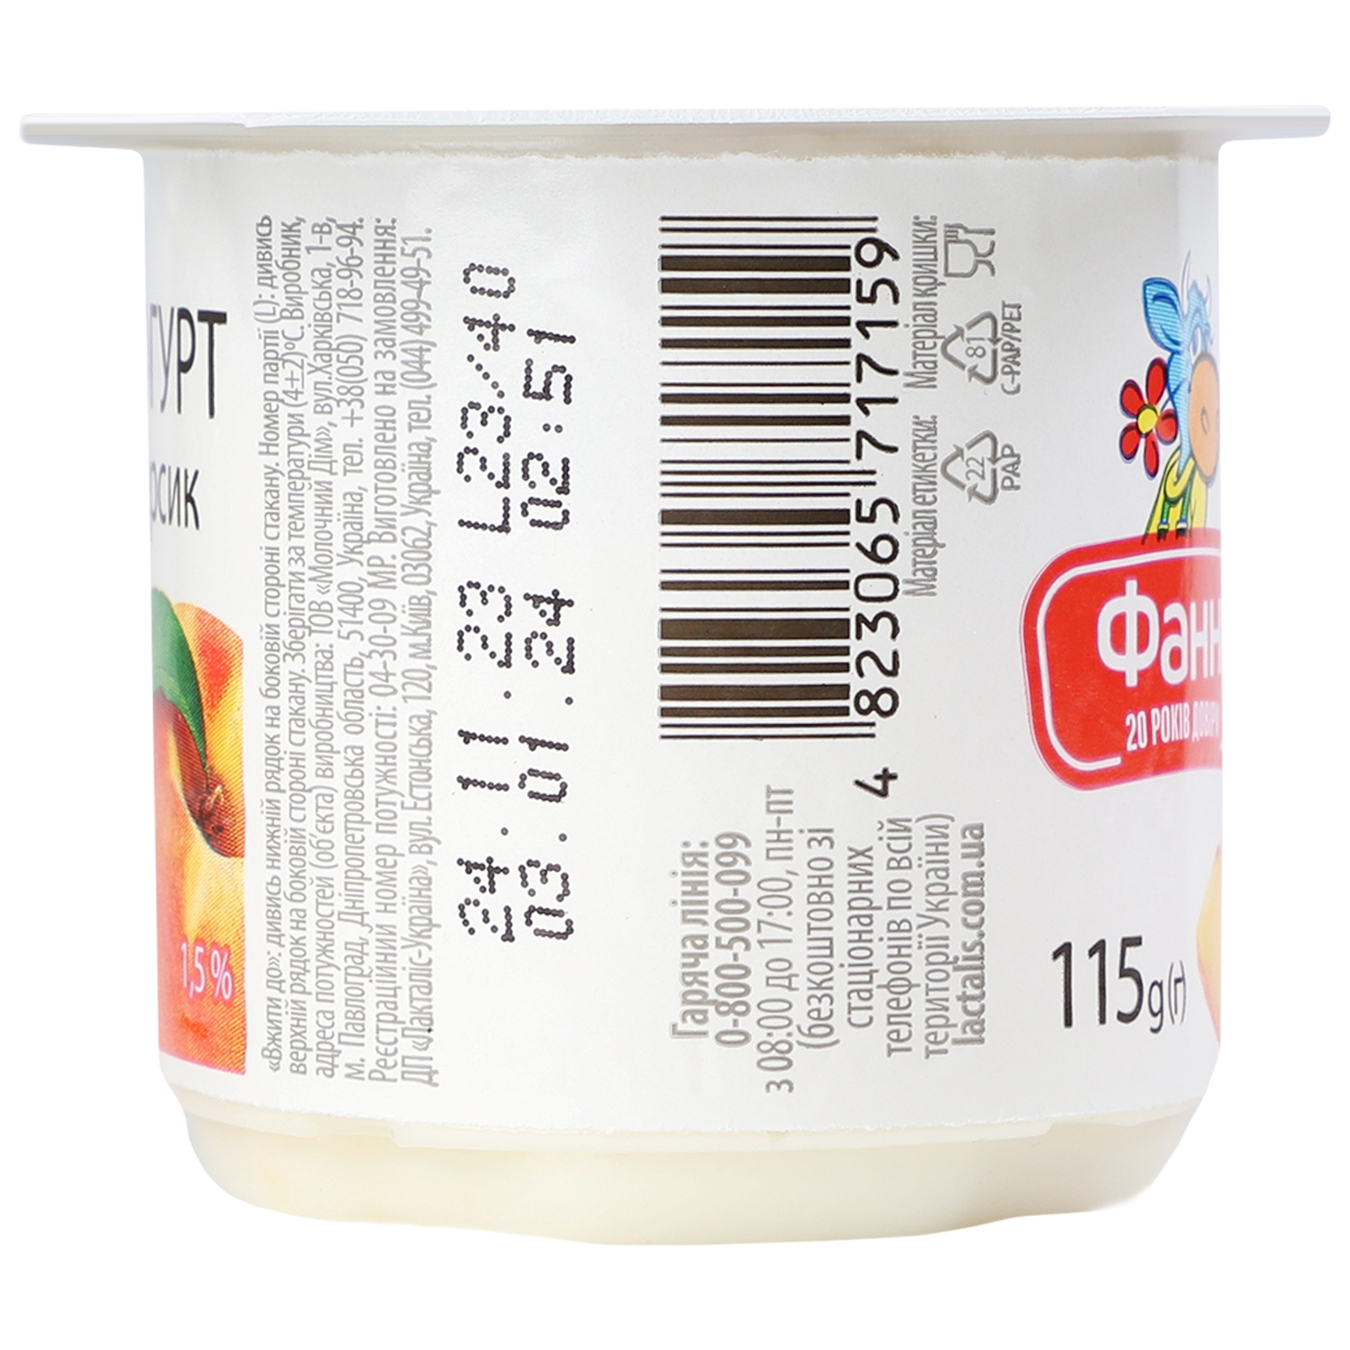 Fanny yogurt with peach filling cup 1.5% 115g 3